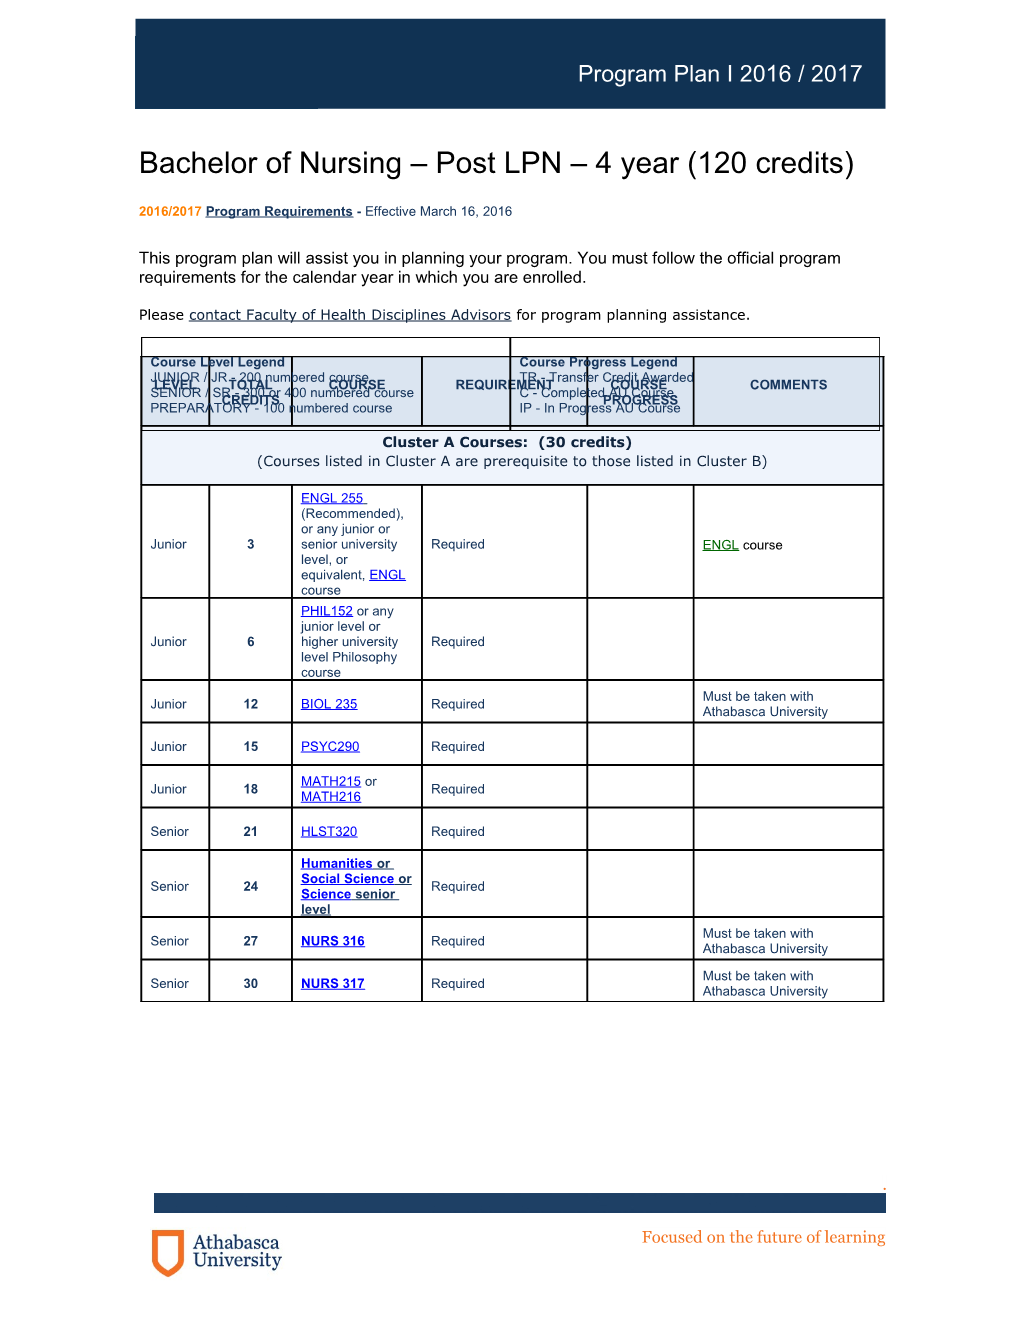 Bachelor of Nursing Post LPN 4 Year (120 Credits)